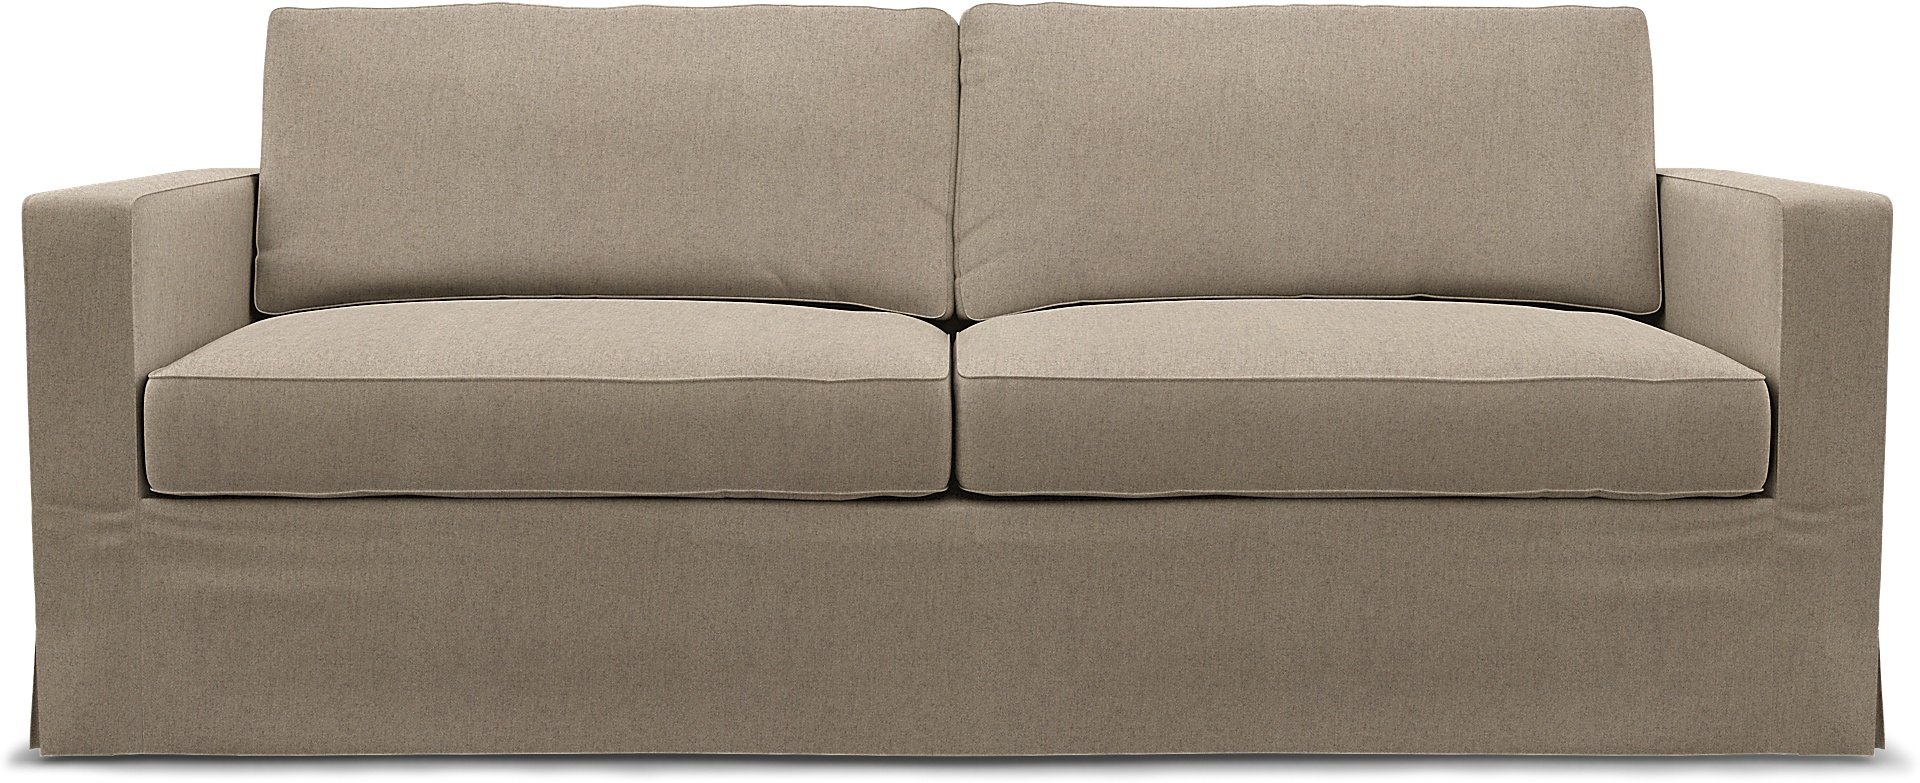 IKEA - Karlstad 3 Seater Sofa Cover, Birch, Wool - Bemz